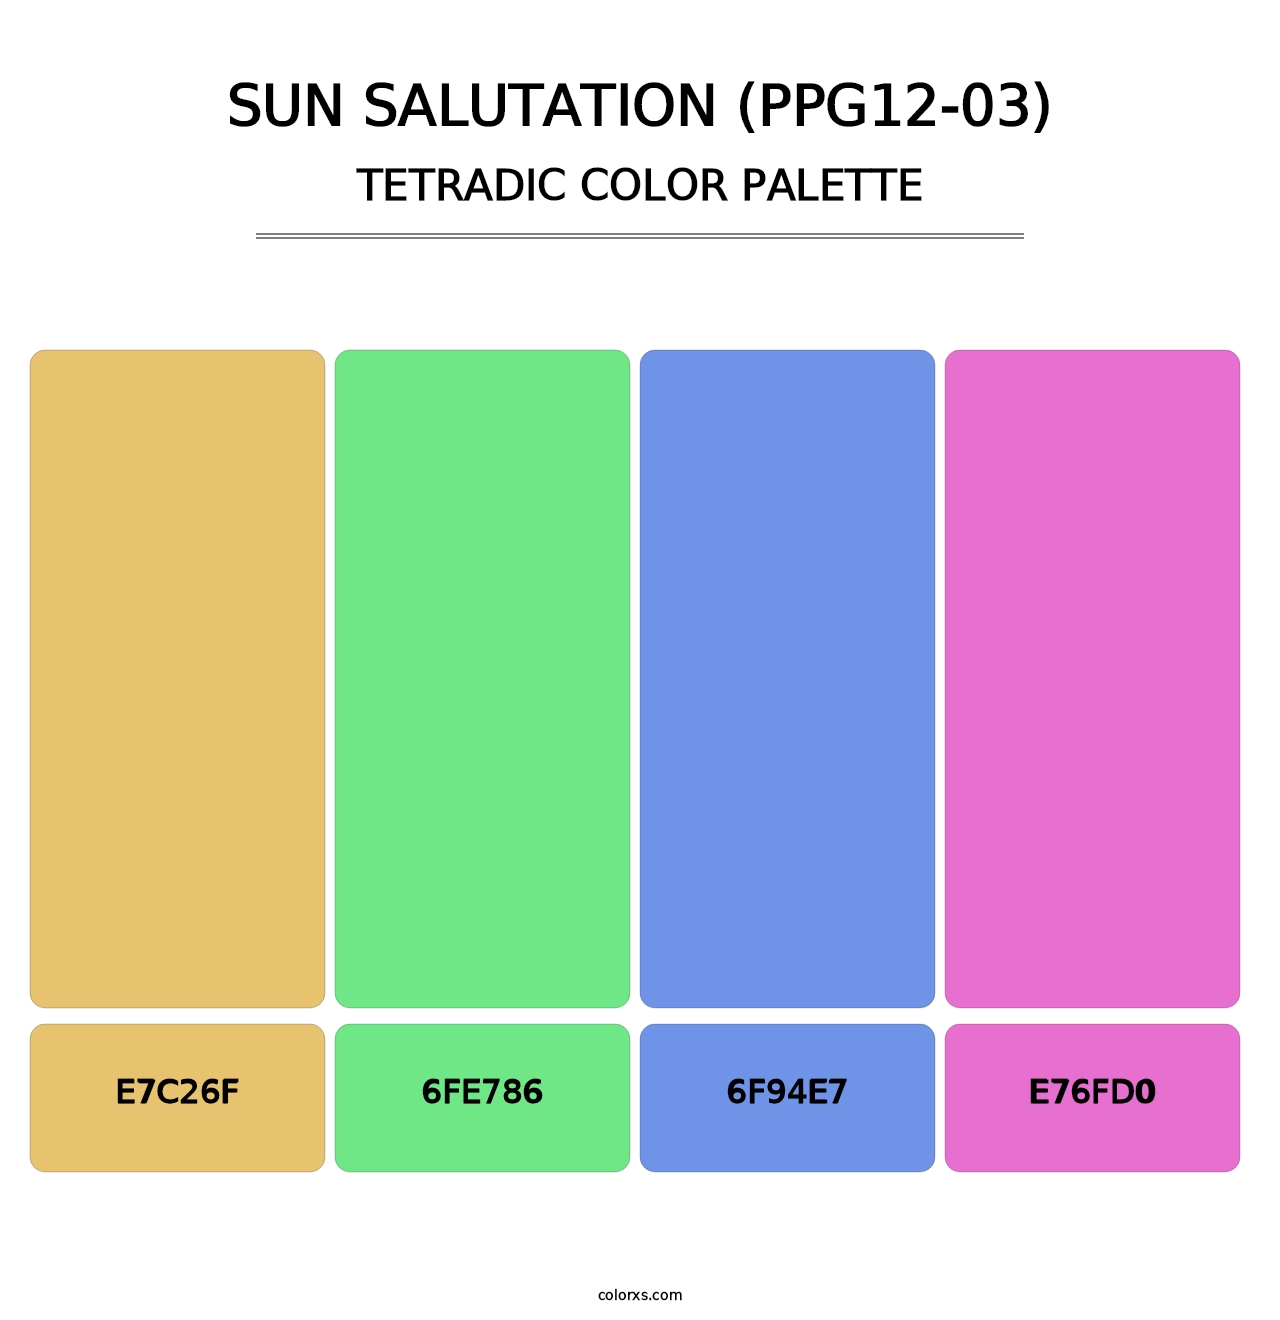 Sun Salutation (PPG12-03) - Tetradic Color Palette